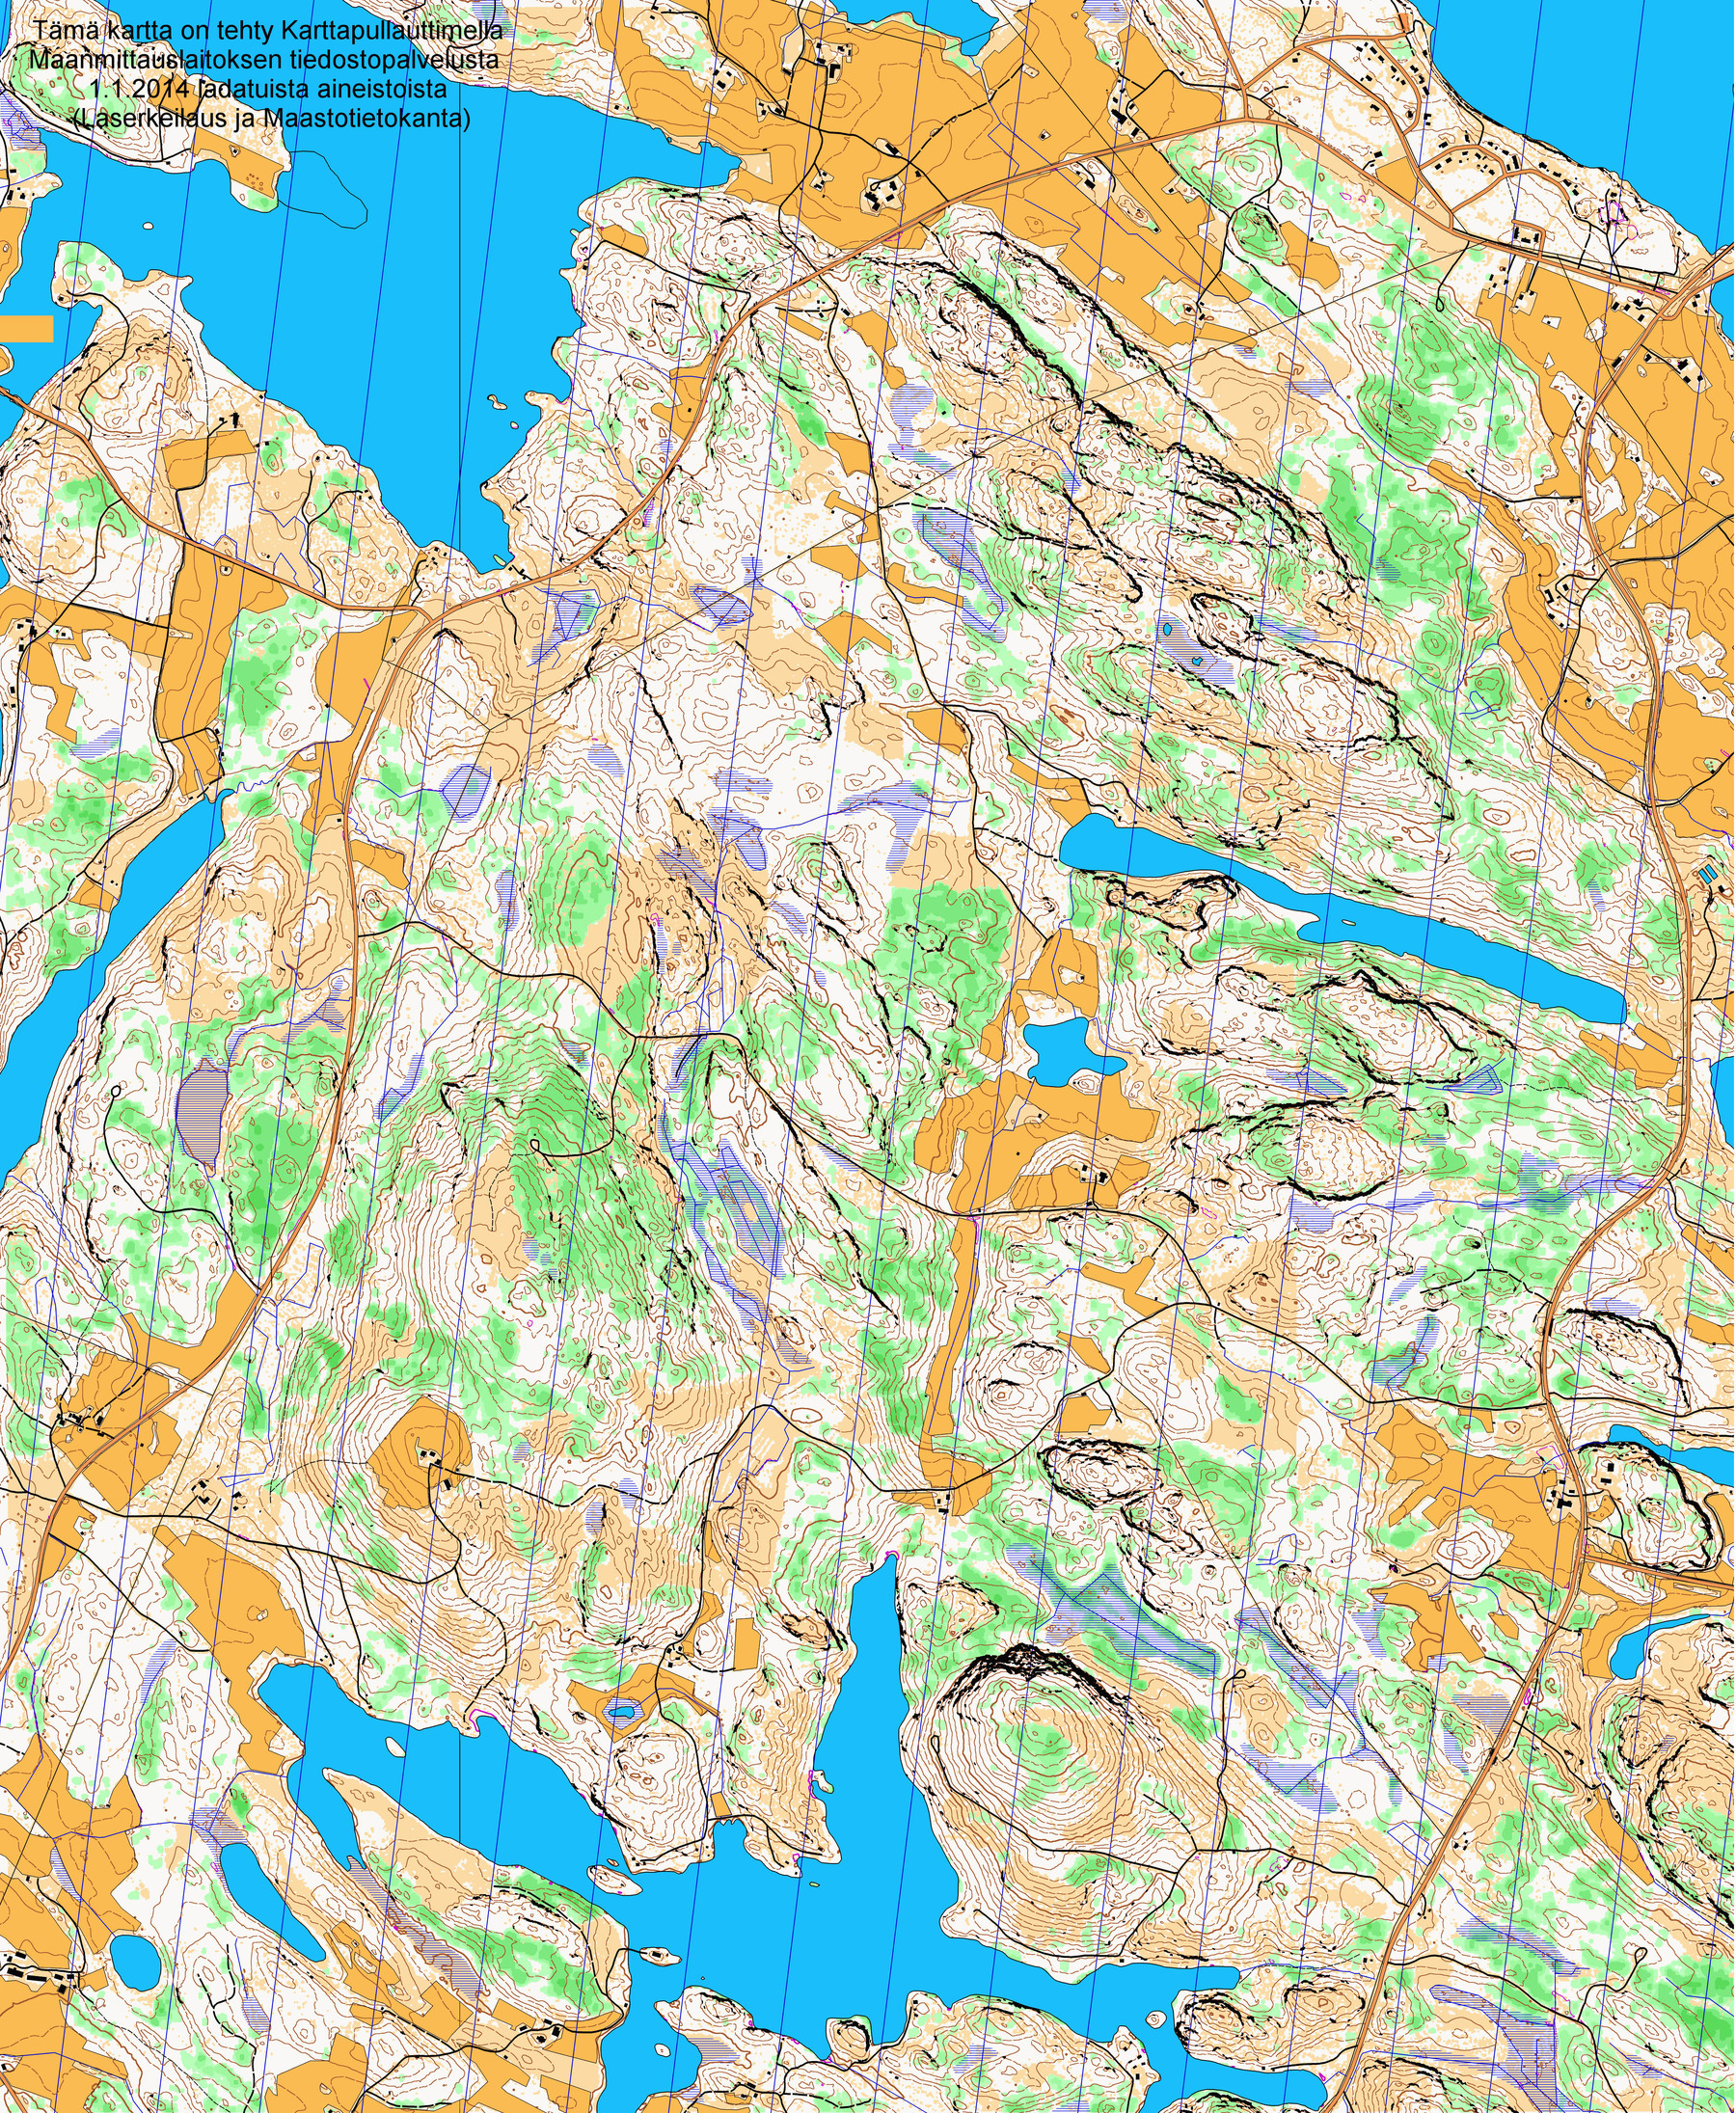 Jukola 2014 maps: Click to compare maps (2014-01-03)